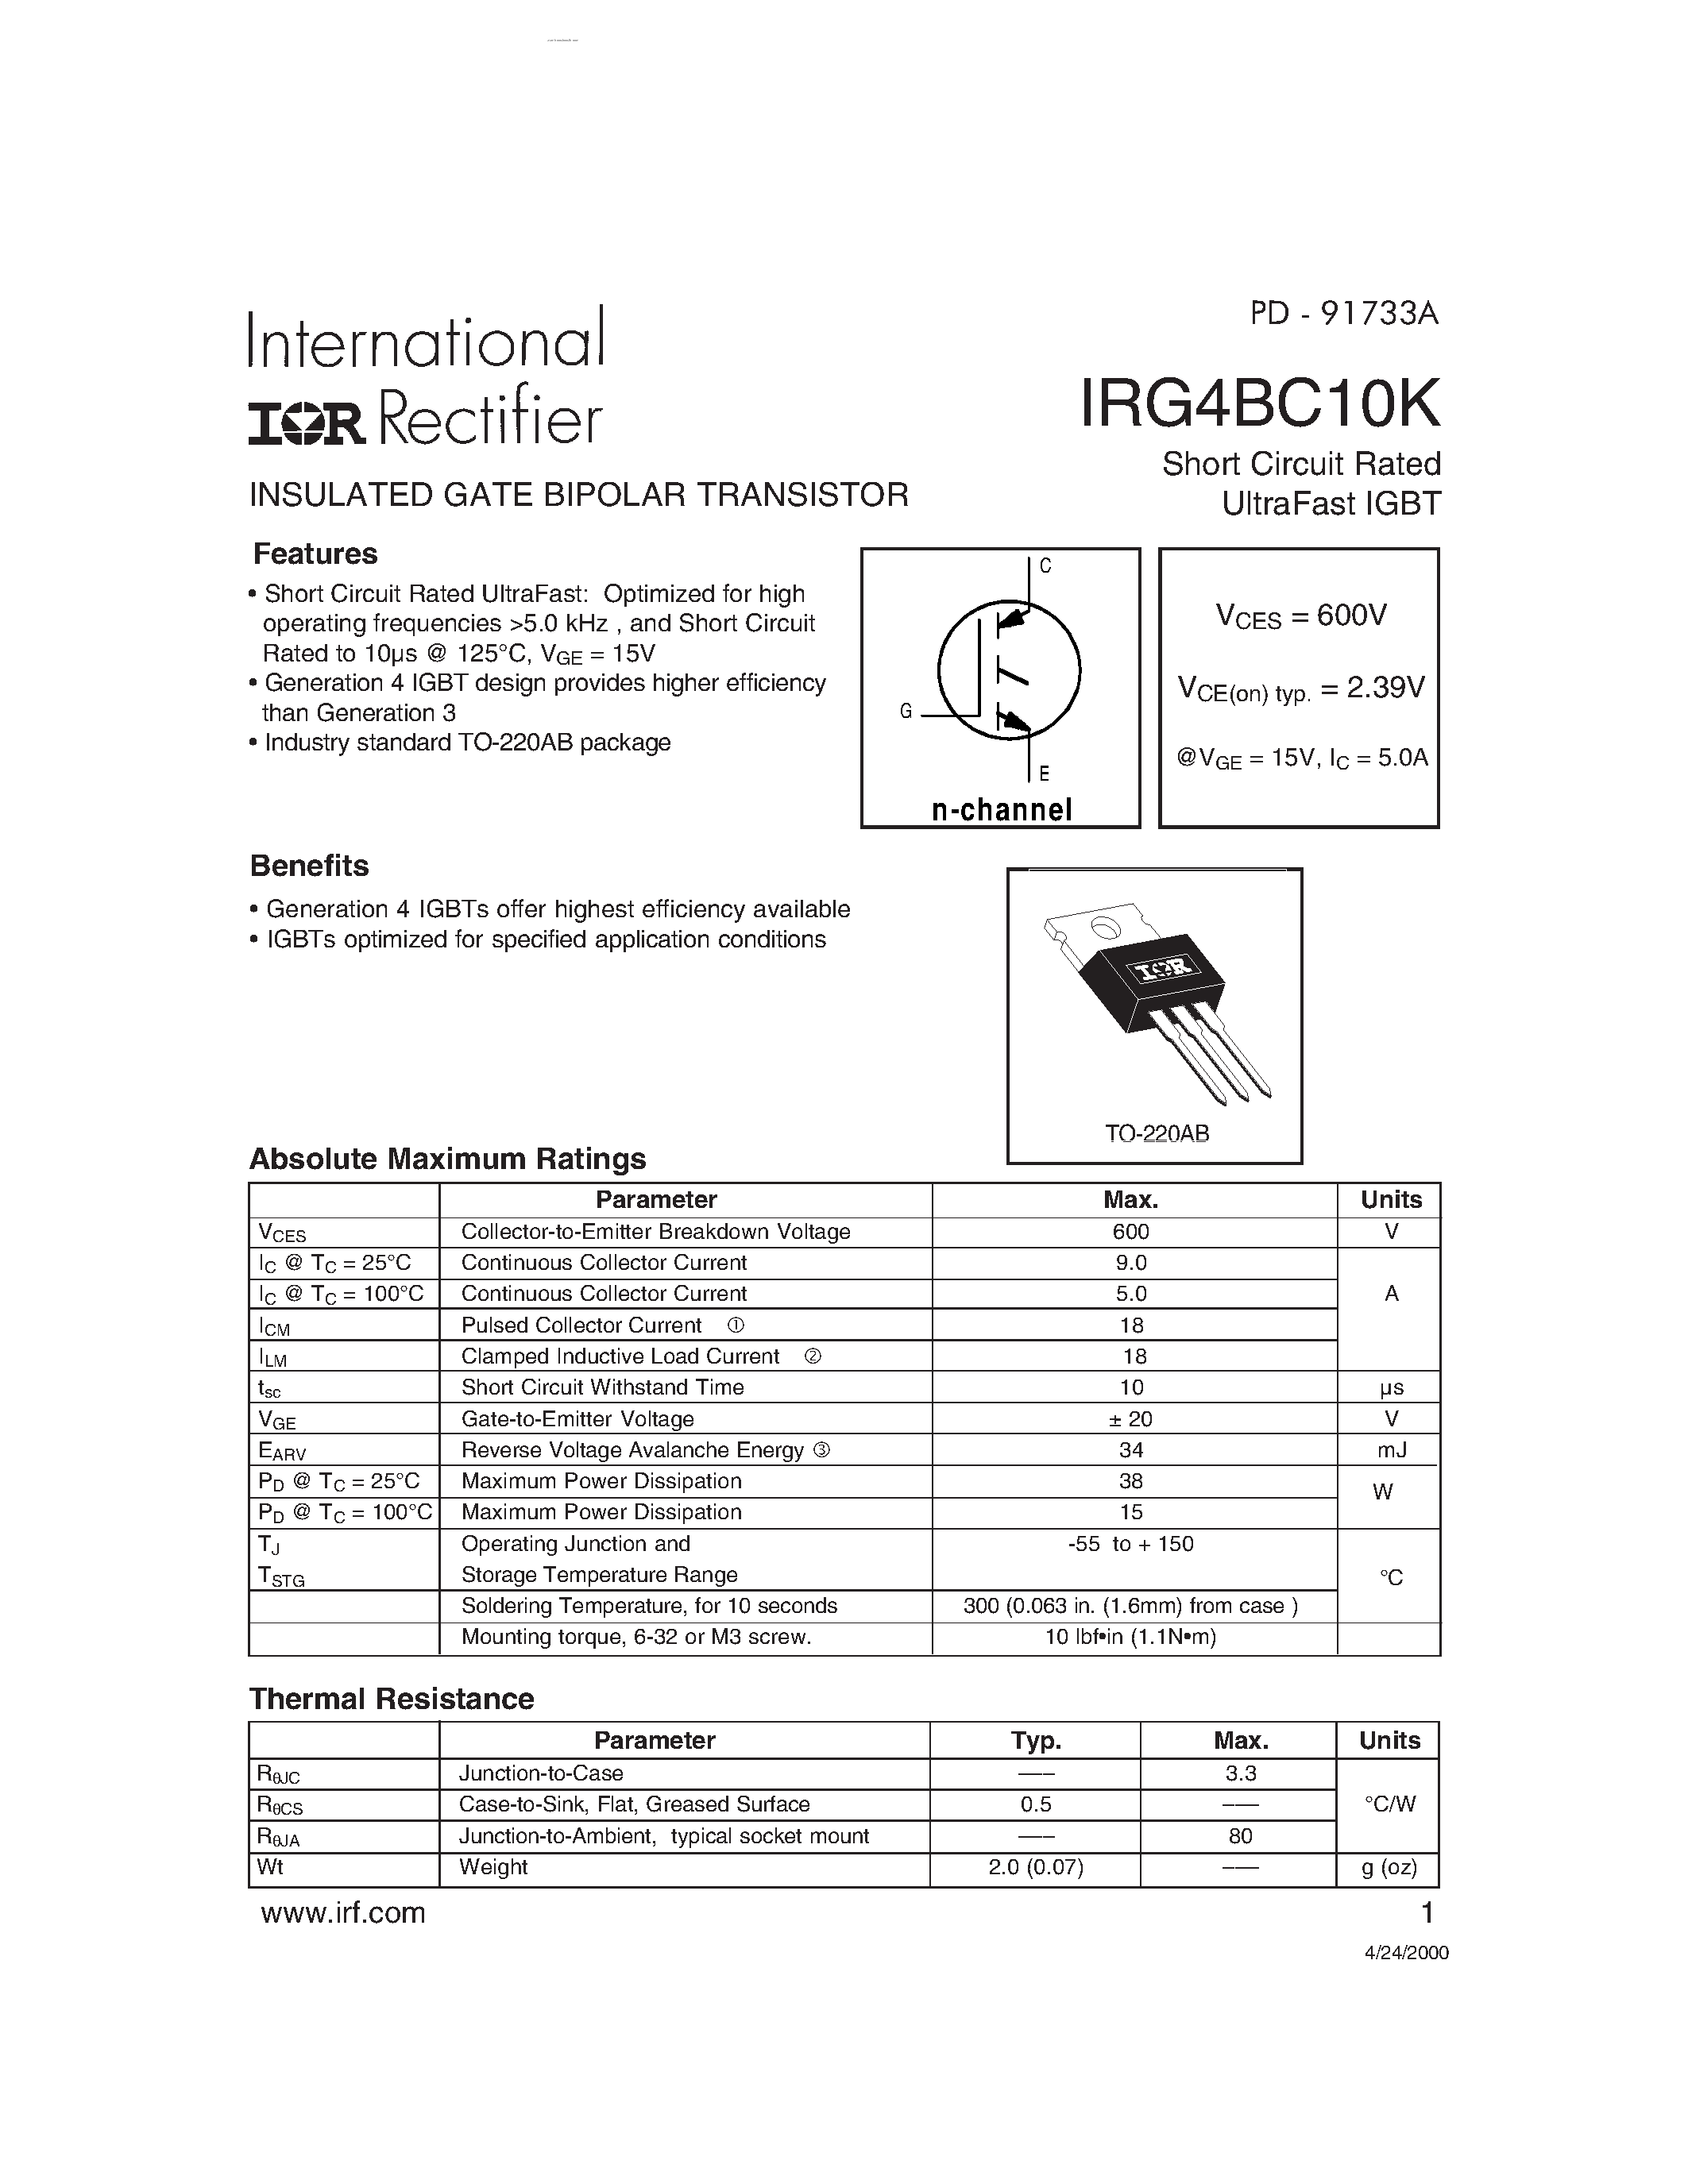 Datasheet IRG4BC10K - Short Circuit Rated UltraFast IGBT page 1